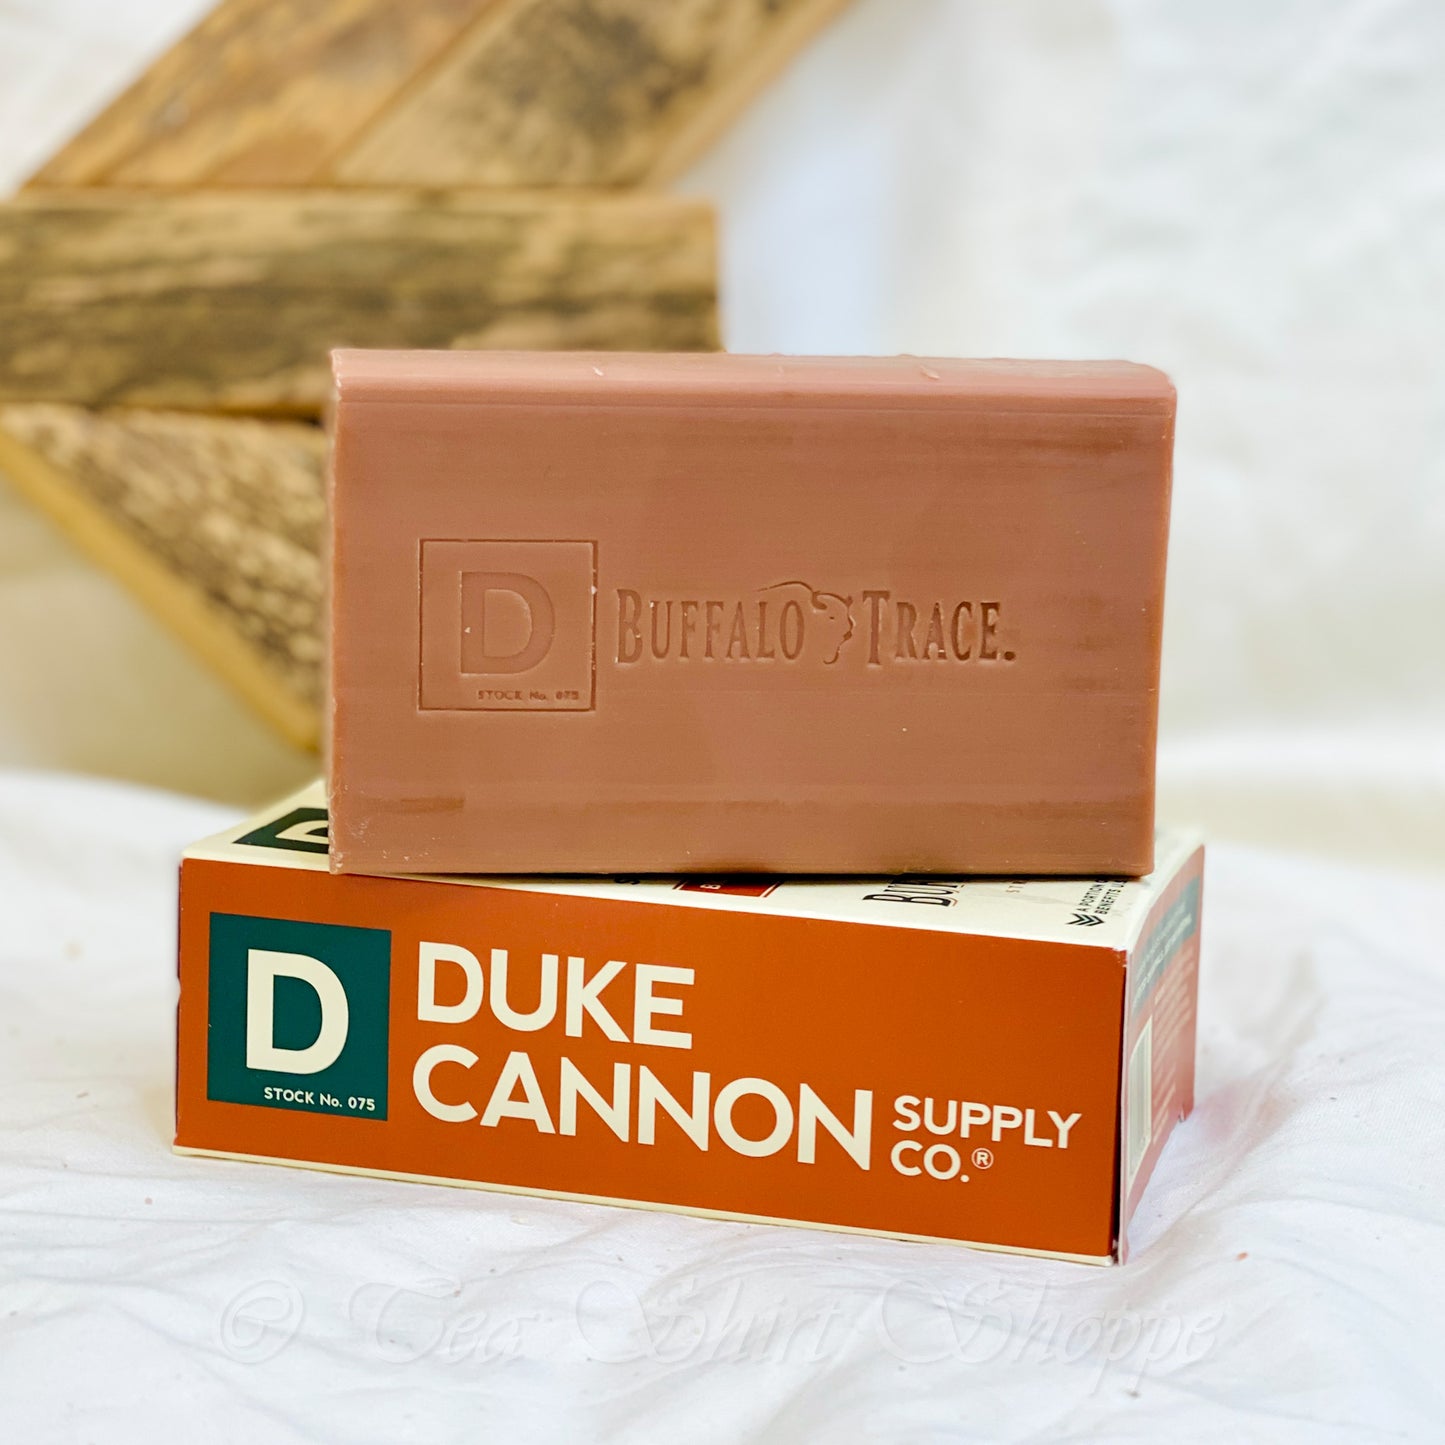  Big American Bourbon Bar Soap by Duke Cannon sold by Tea-Shirt Shoppe - dukecannonbuffalotracesoap-2.jpg